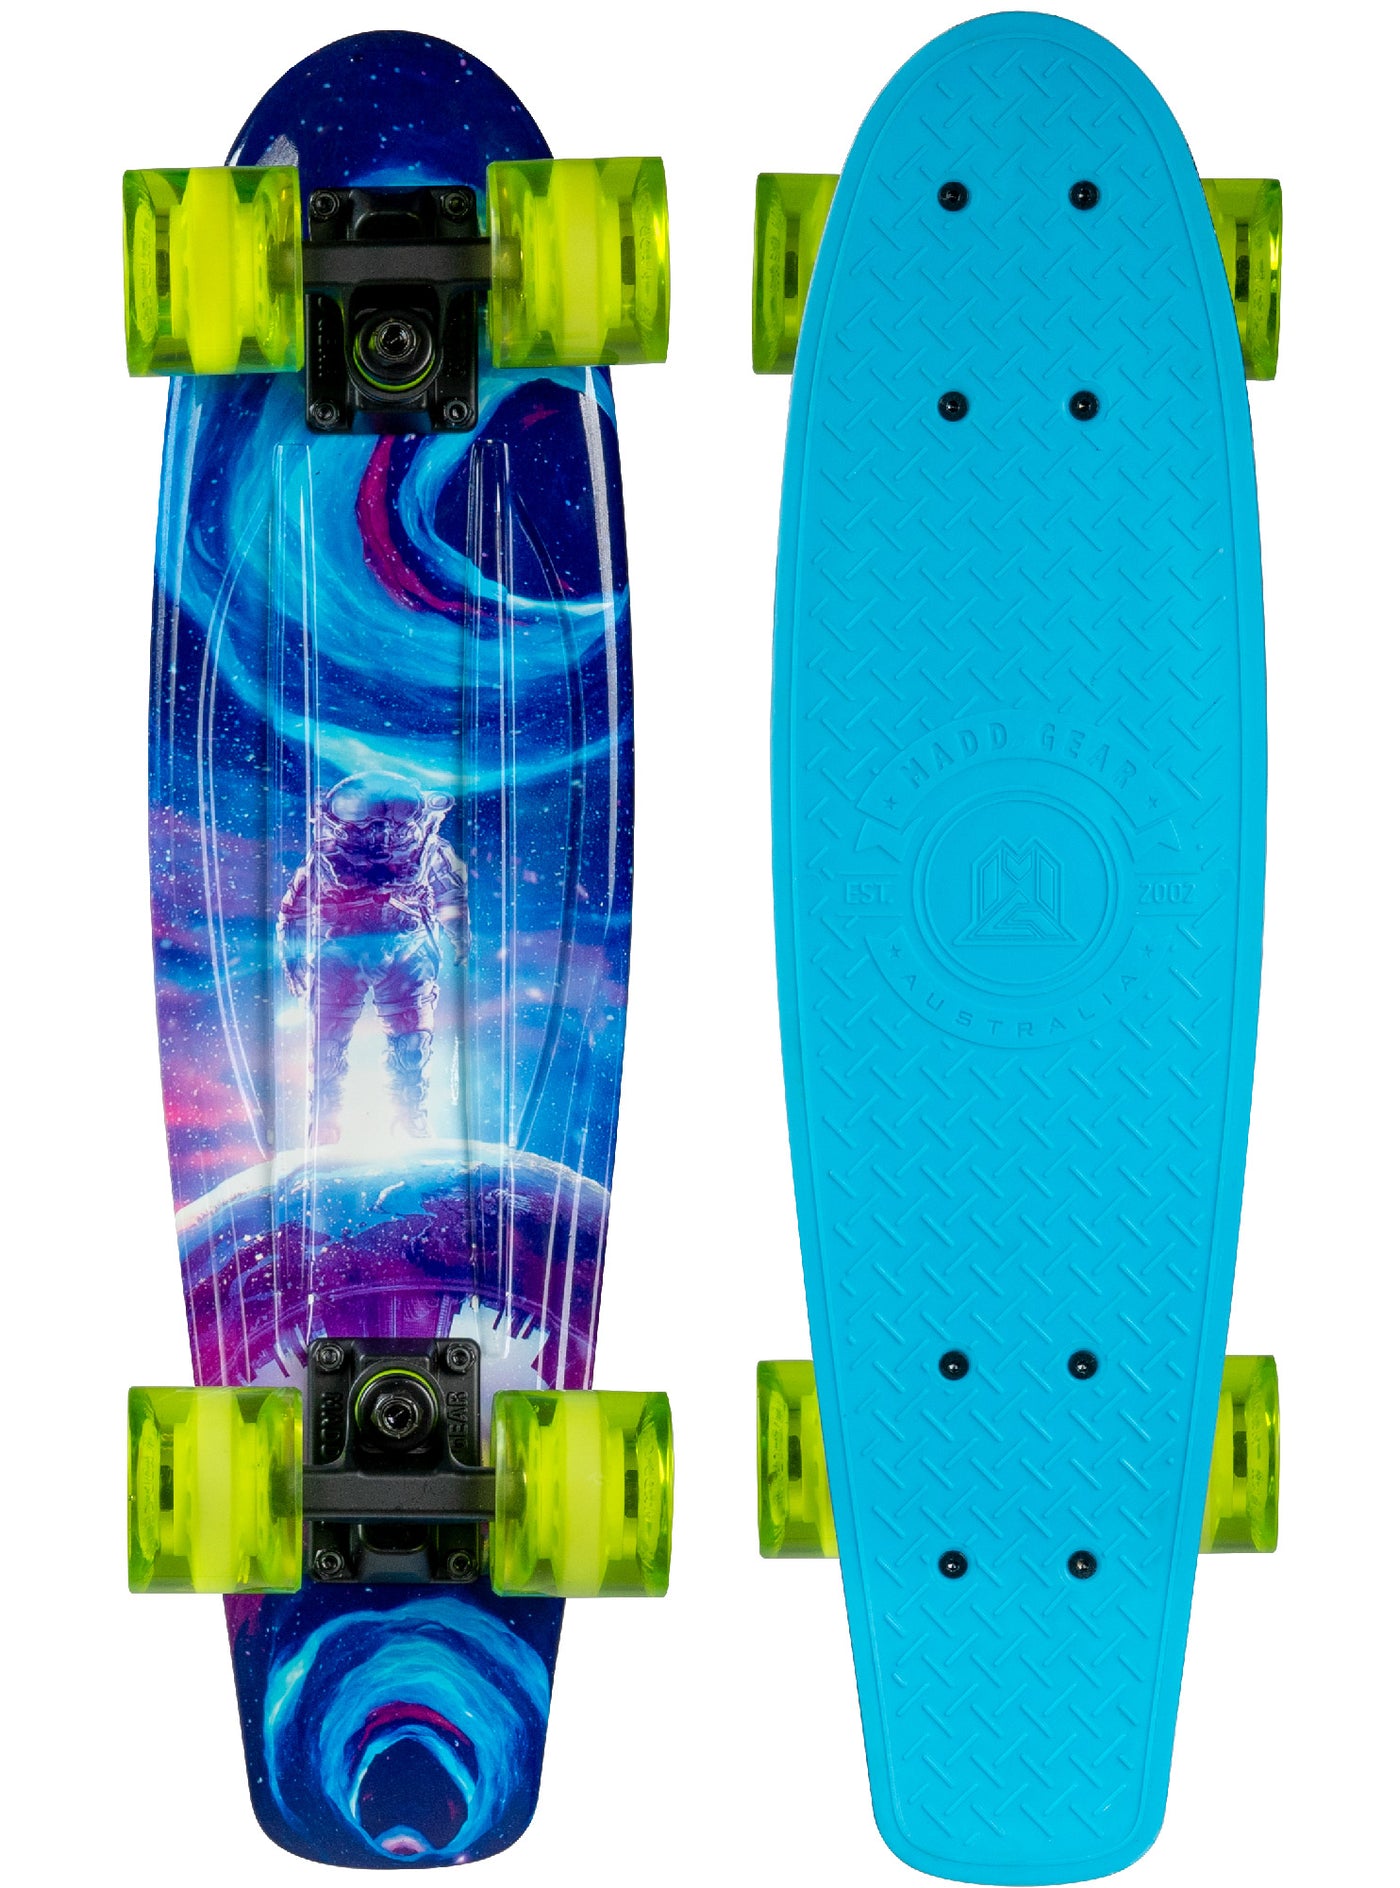 Madd Gear Retro Board Skateboard Penny 22" Plastic Flexible Kids Children Complete High Quality Blue Green Astronaut